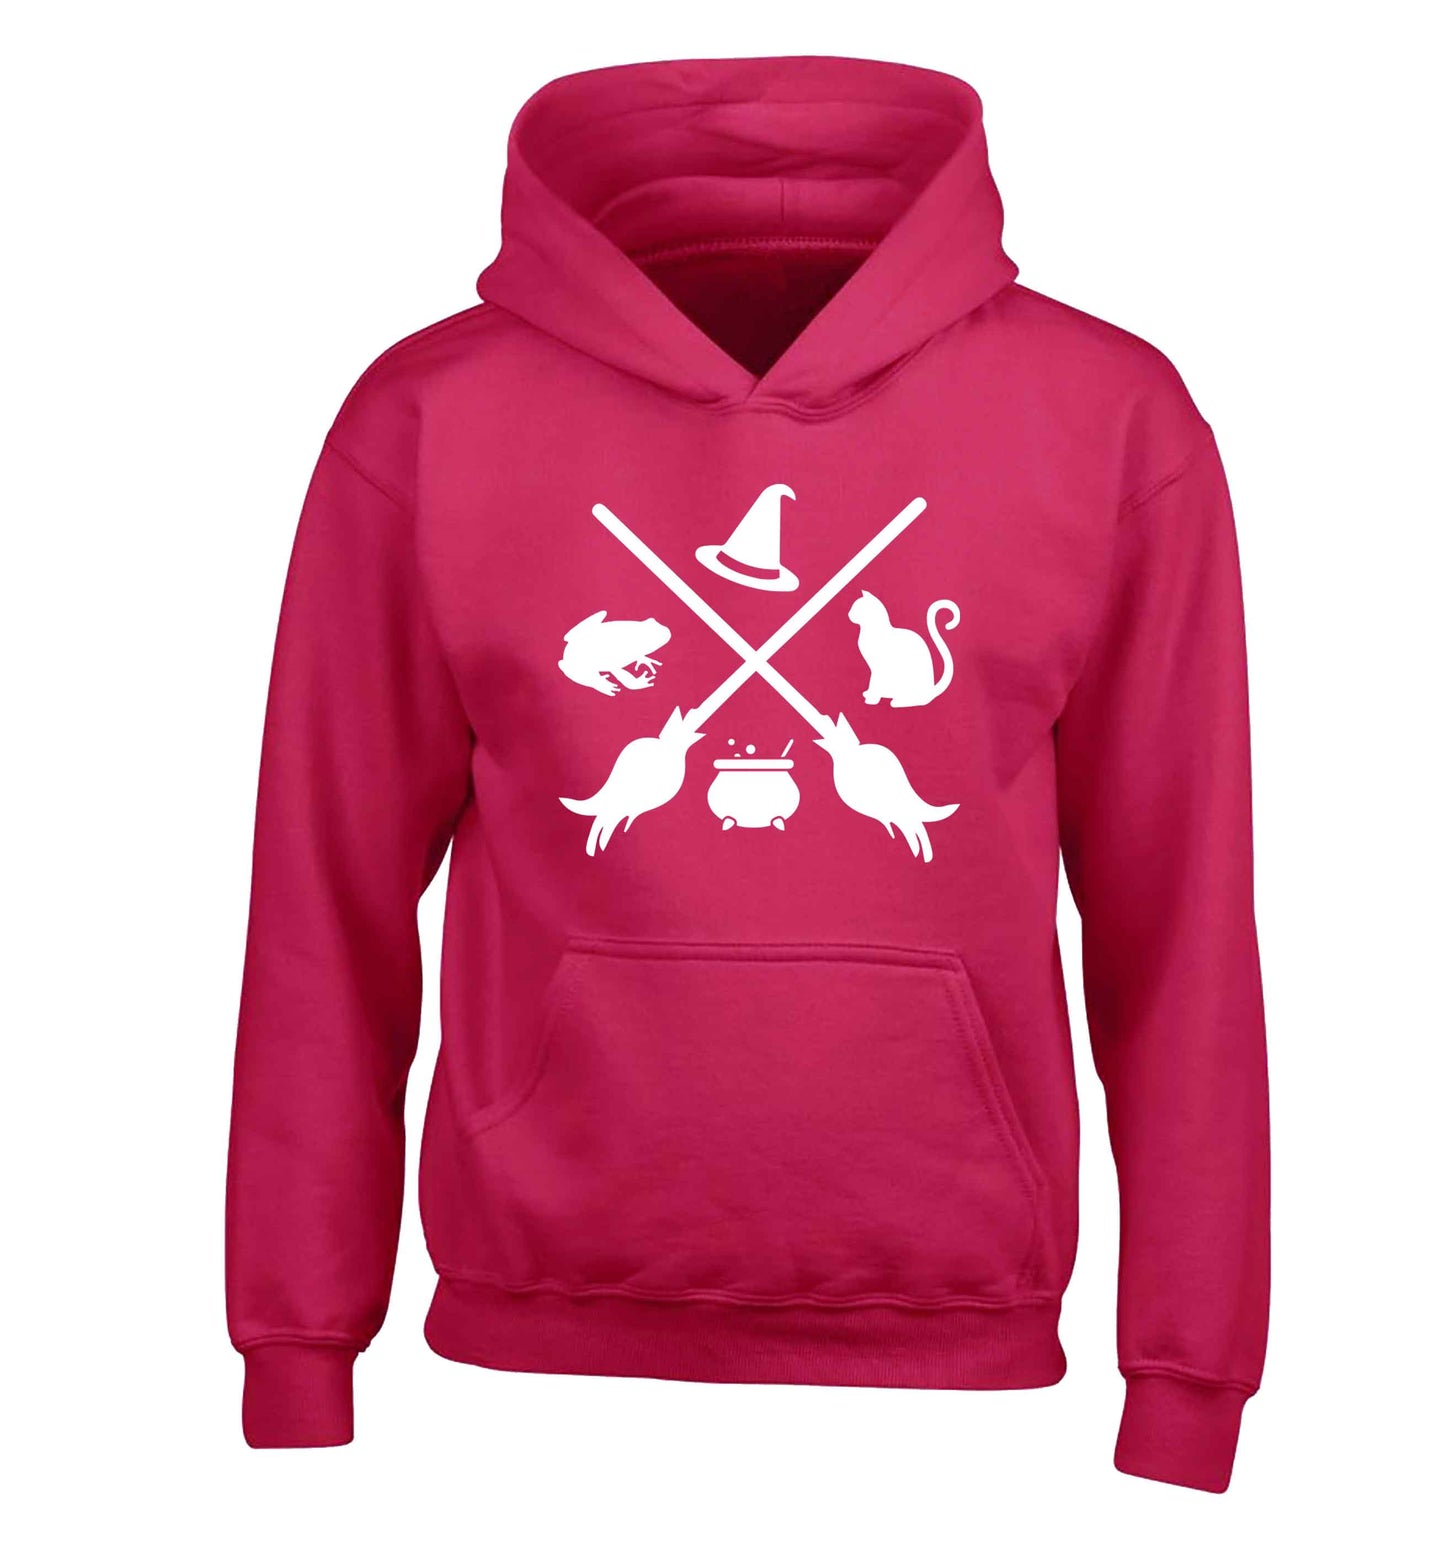 Witch symbol children's pink hoodie 12-13 Years